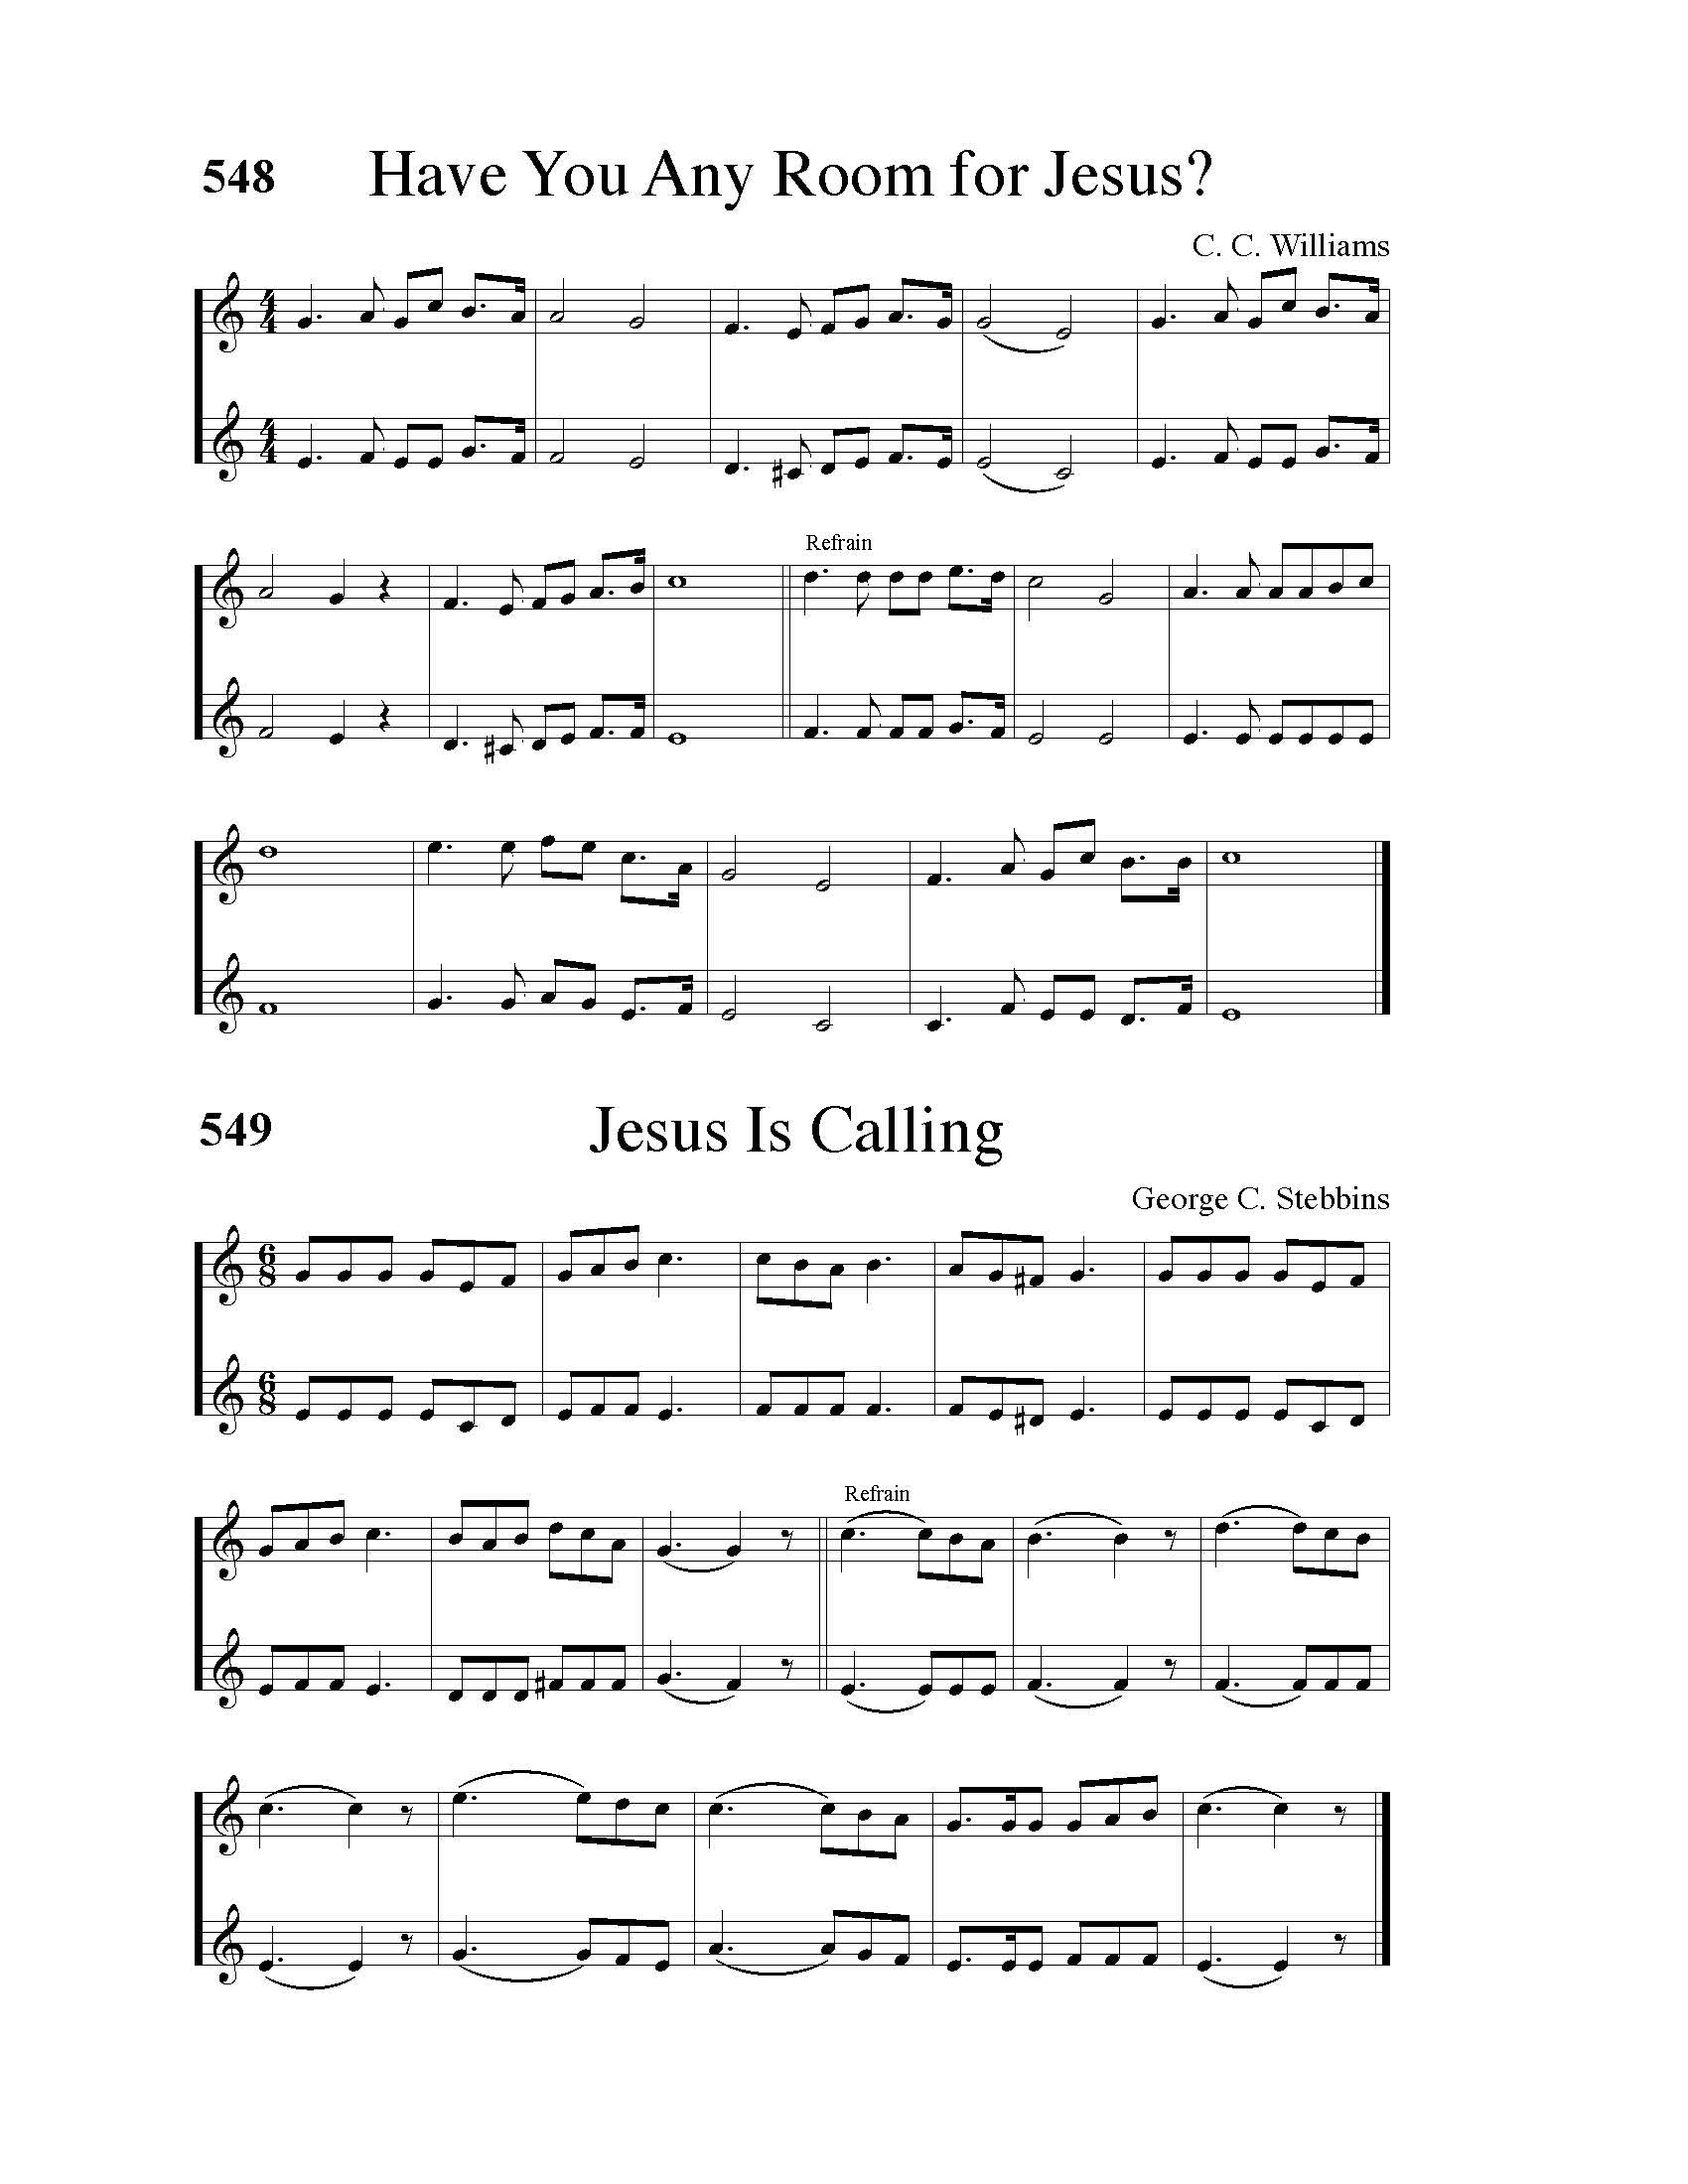 Living Hymns Orchestration: LH12 B flat (Clarinet, Cornet/Trumpet)